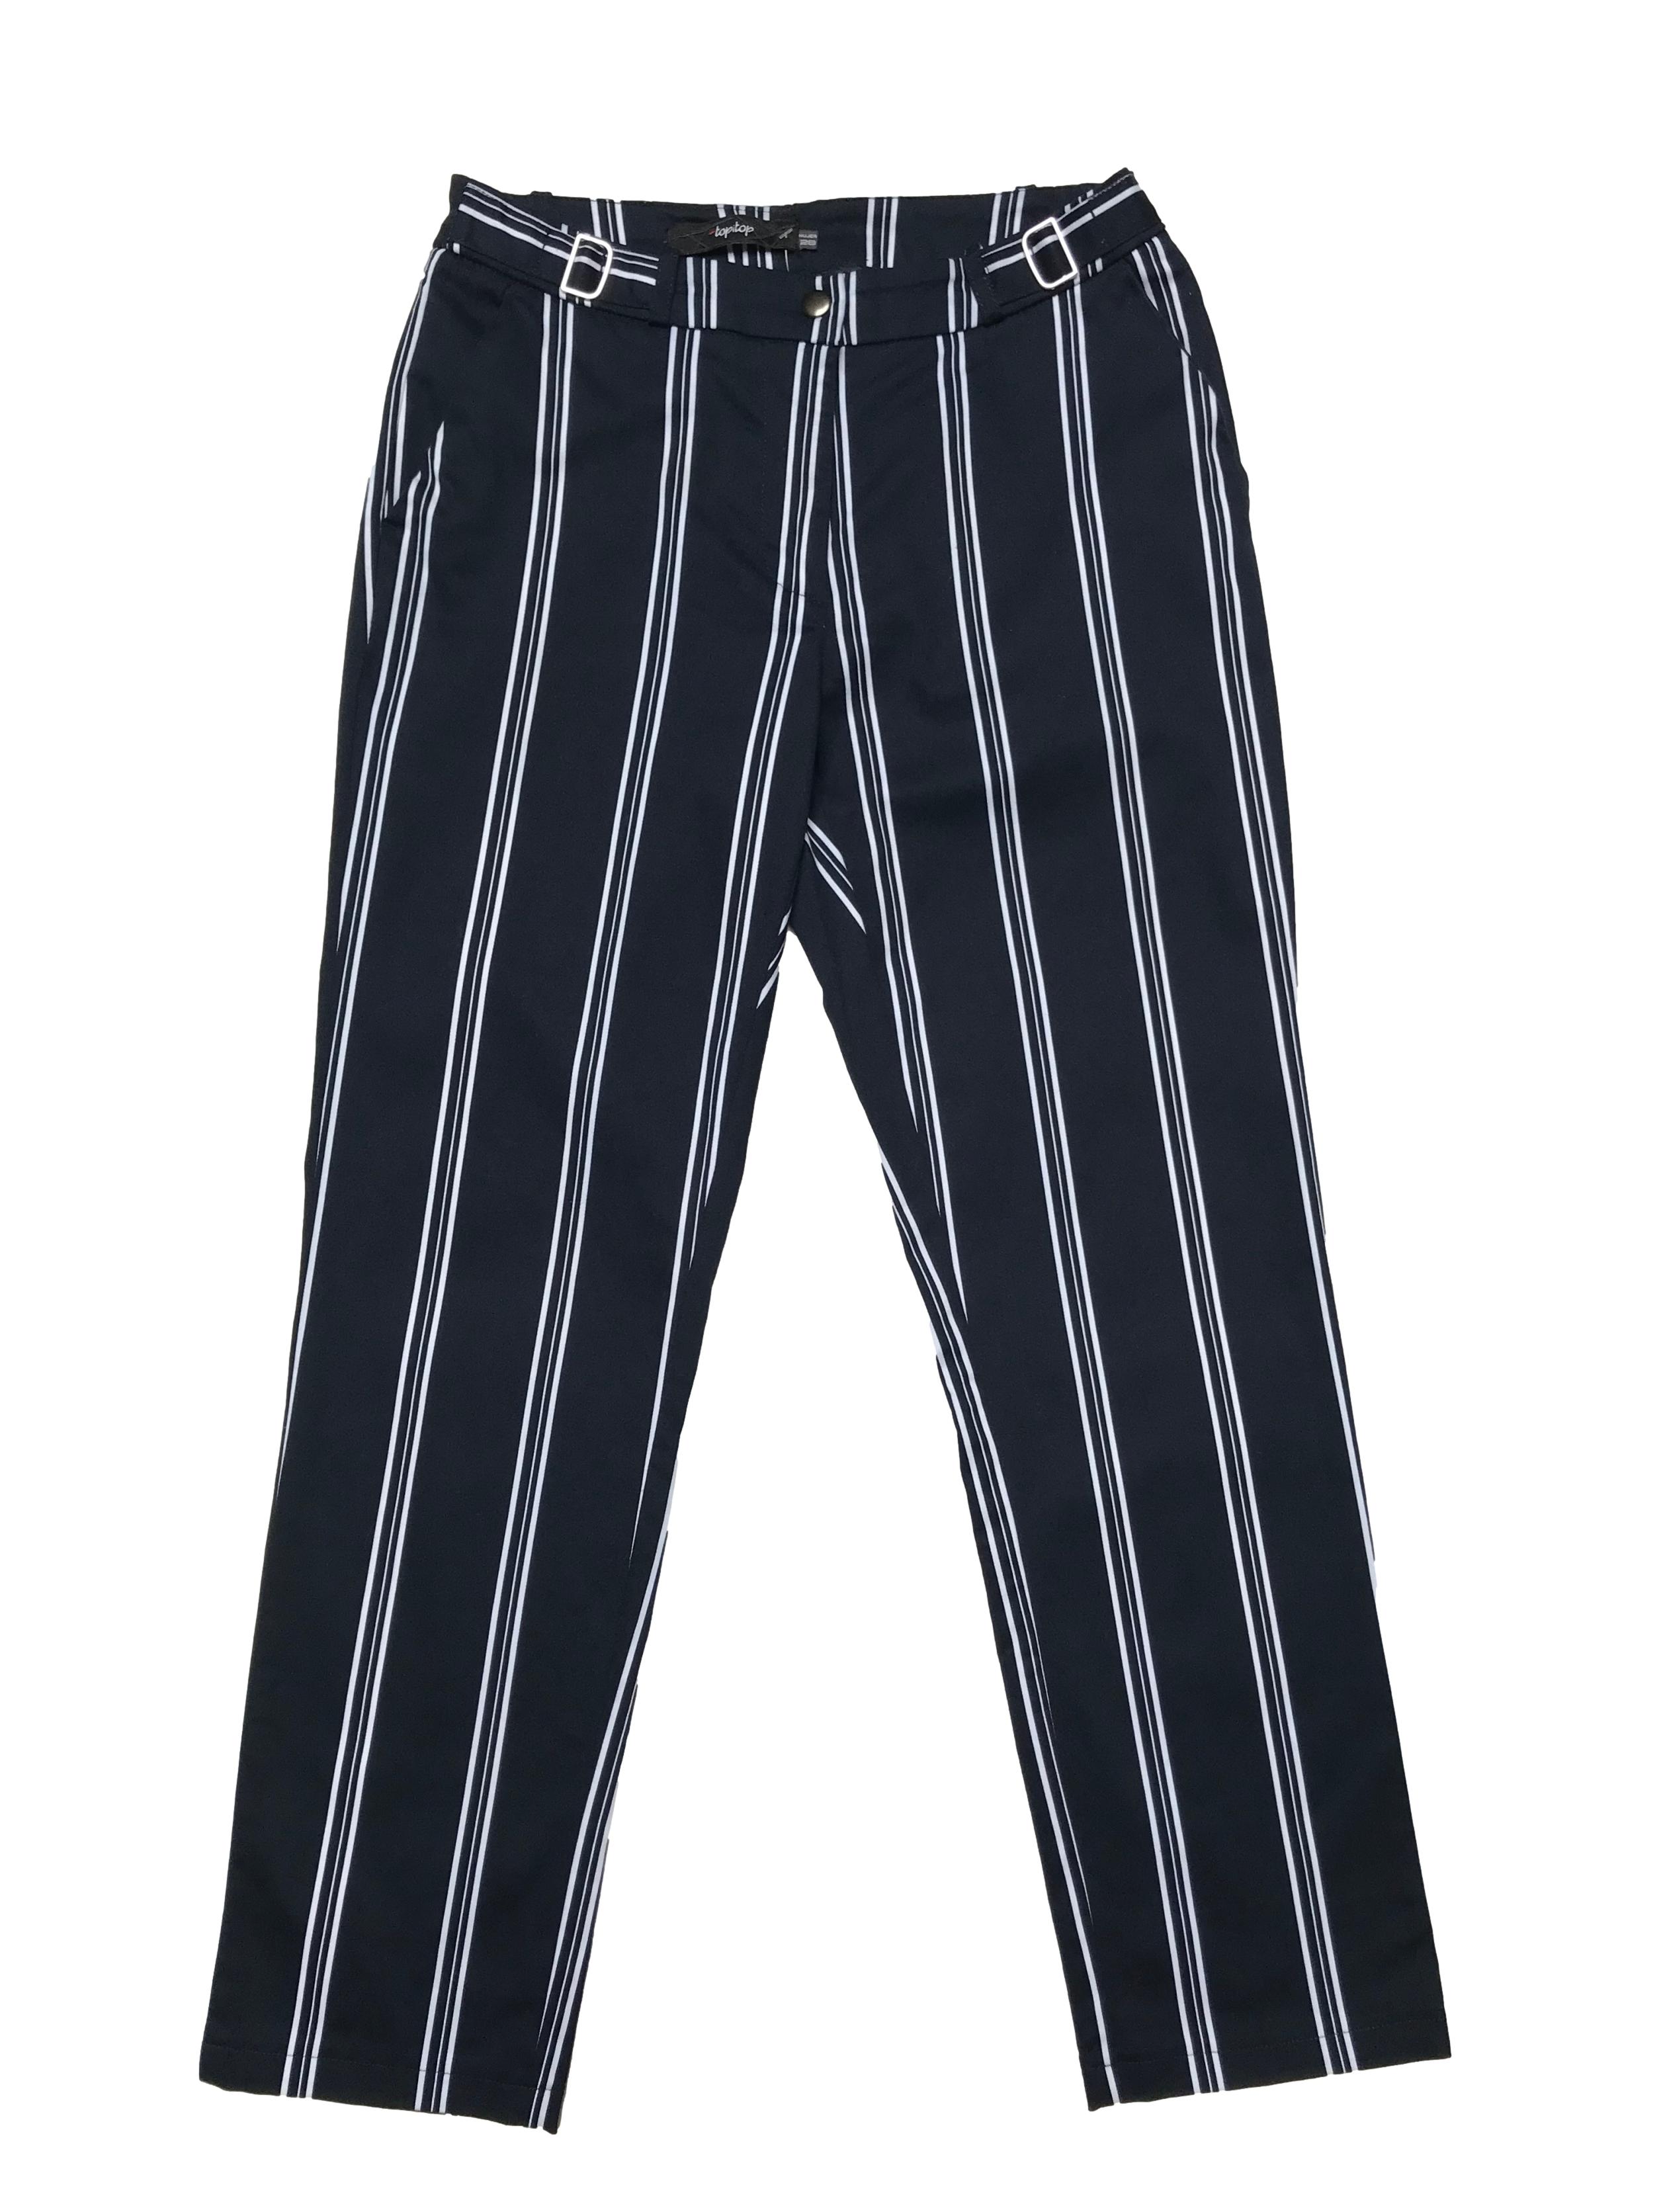 Pantalón azul con franjas blancas 98% algodón ligeramente stretch. Cintura 72cm Largo 90cm 